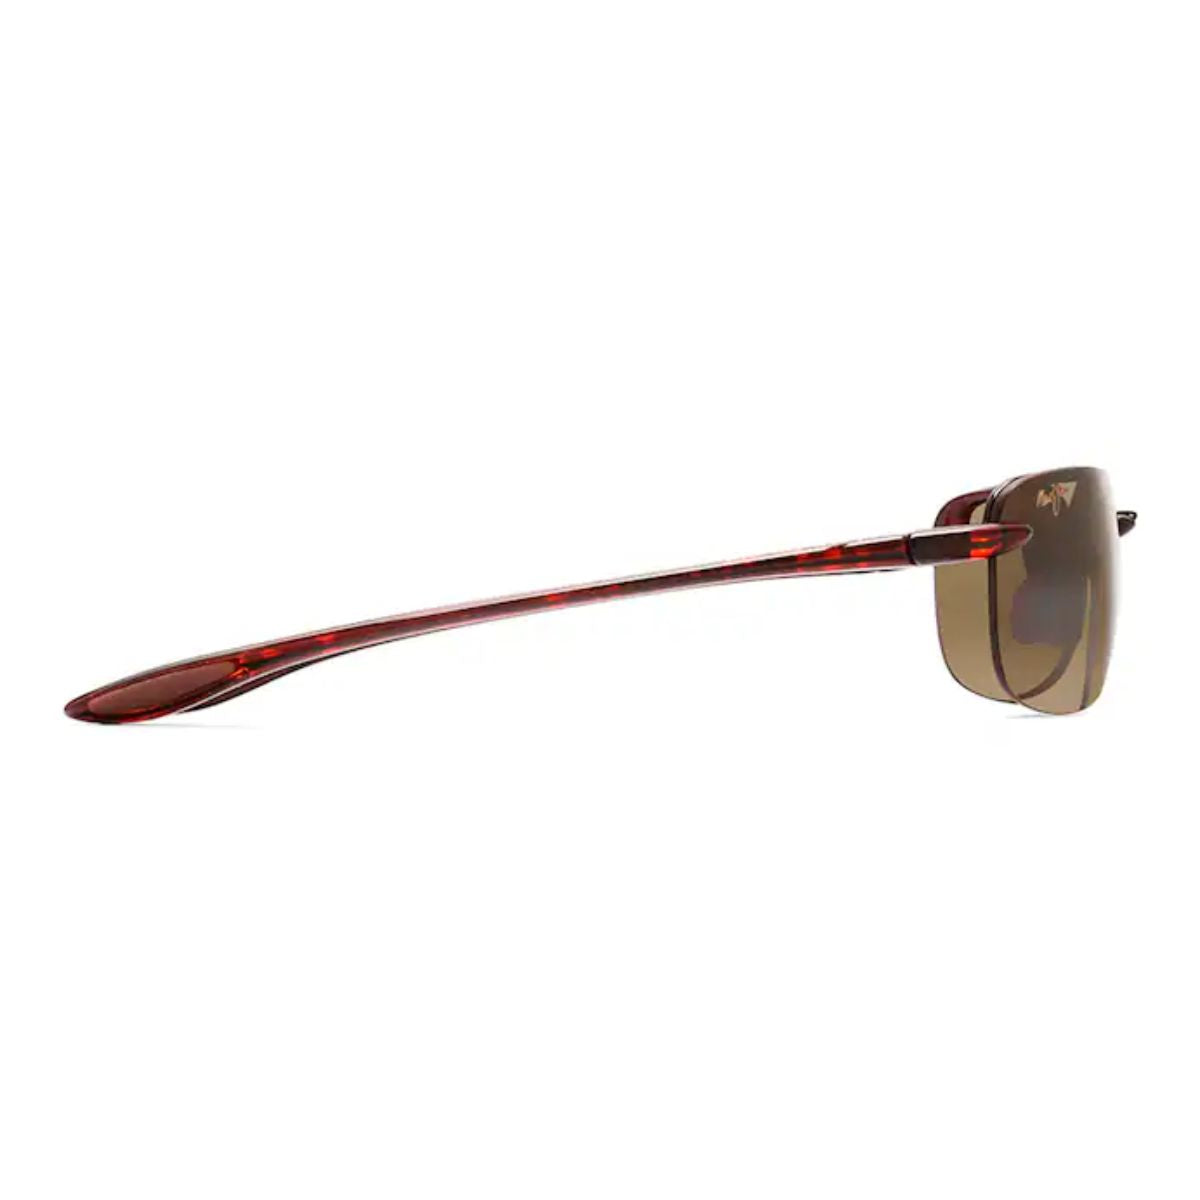 "Maui Jim Sandy Beach Polarized Sunglasses For Men's At Online Optorium"